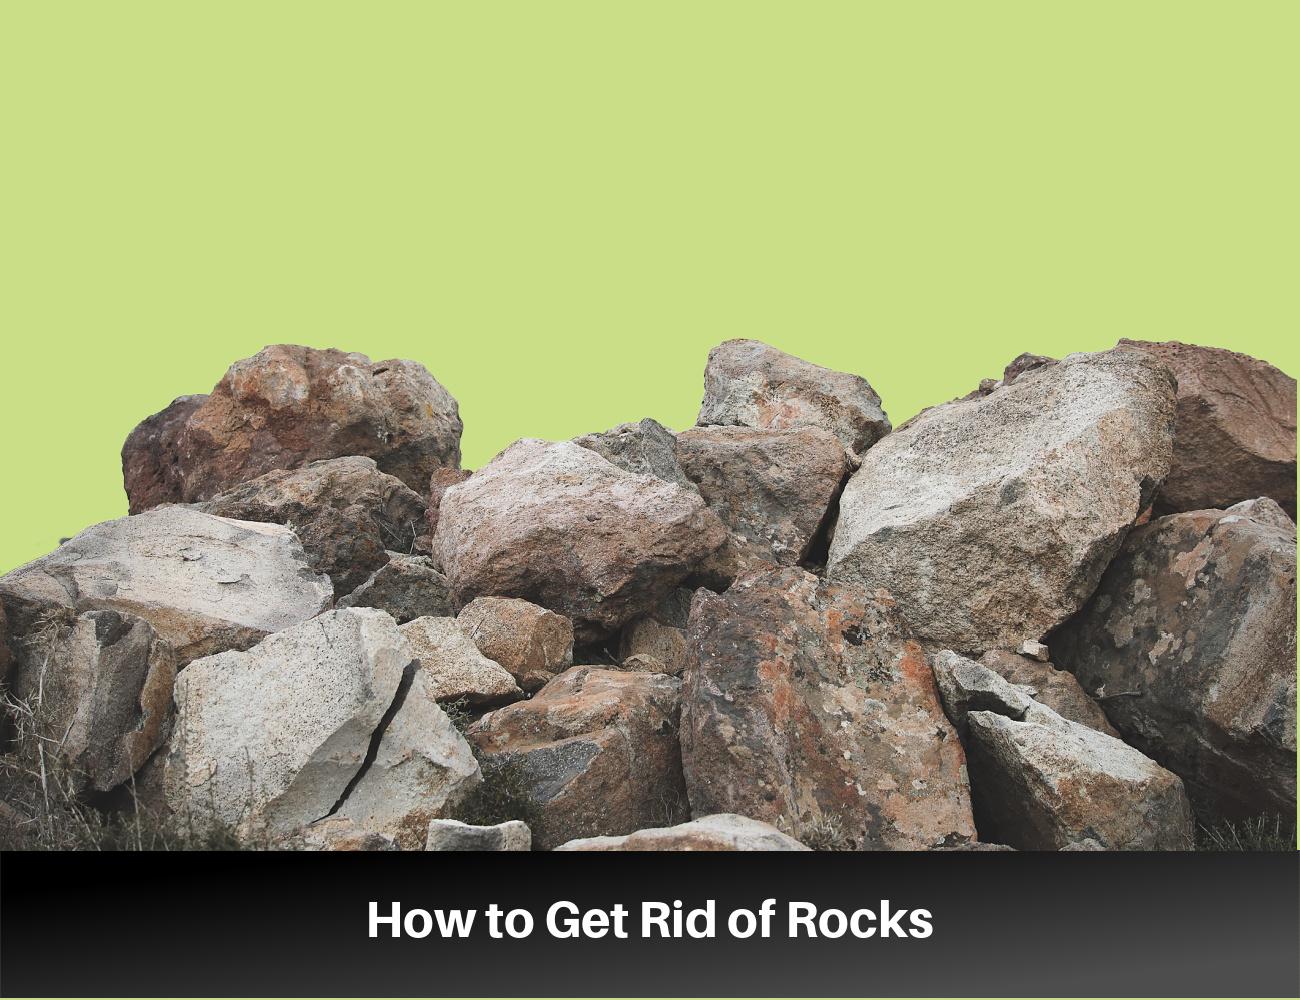 Get rid of rocks